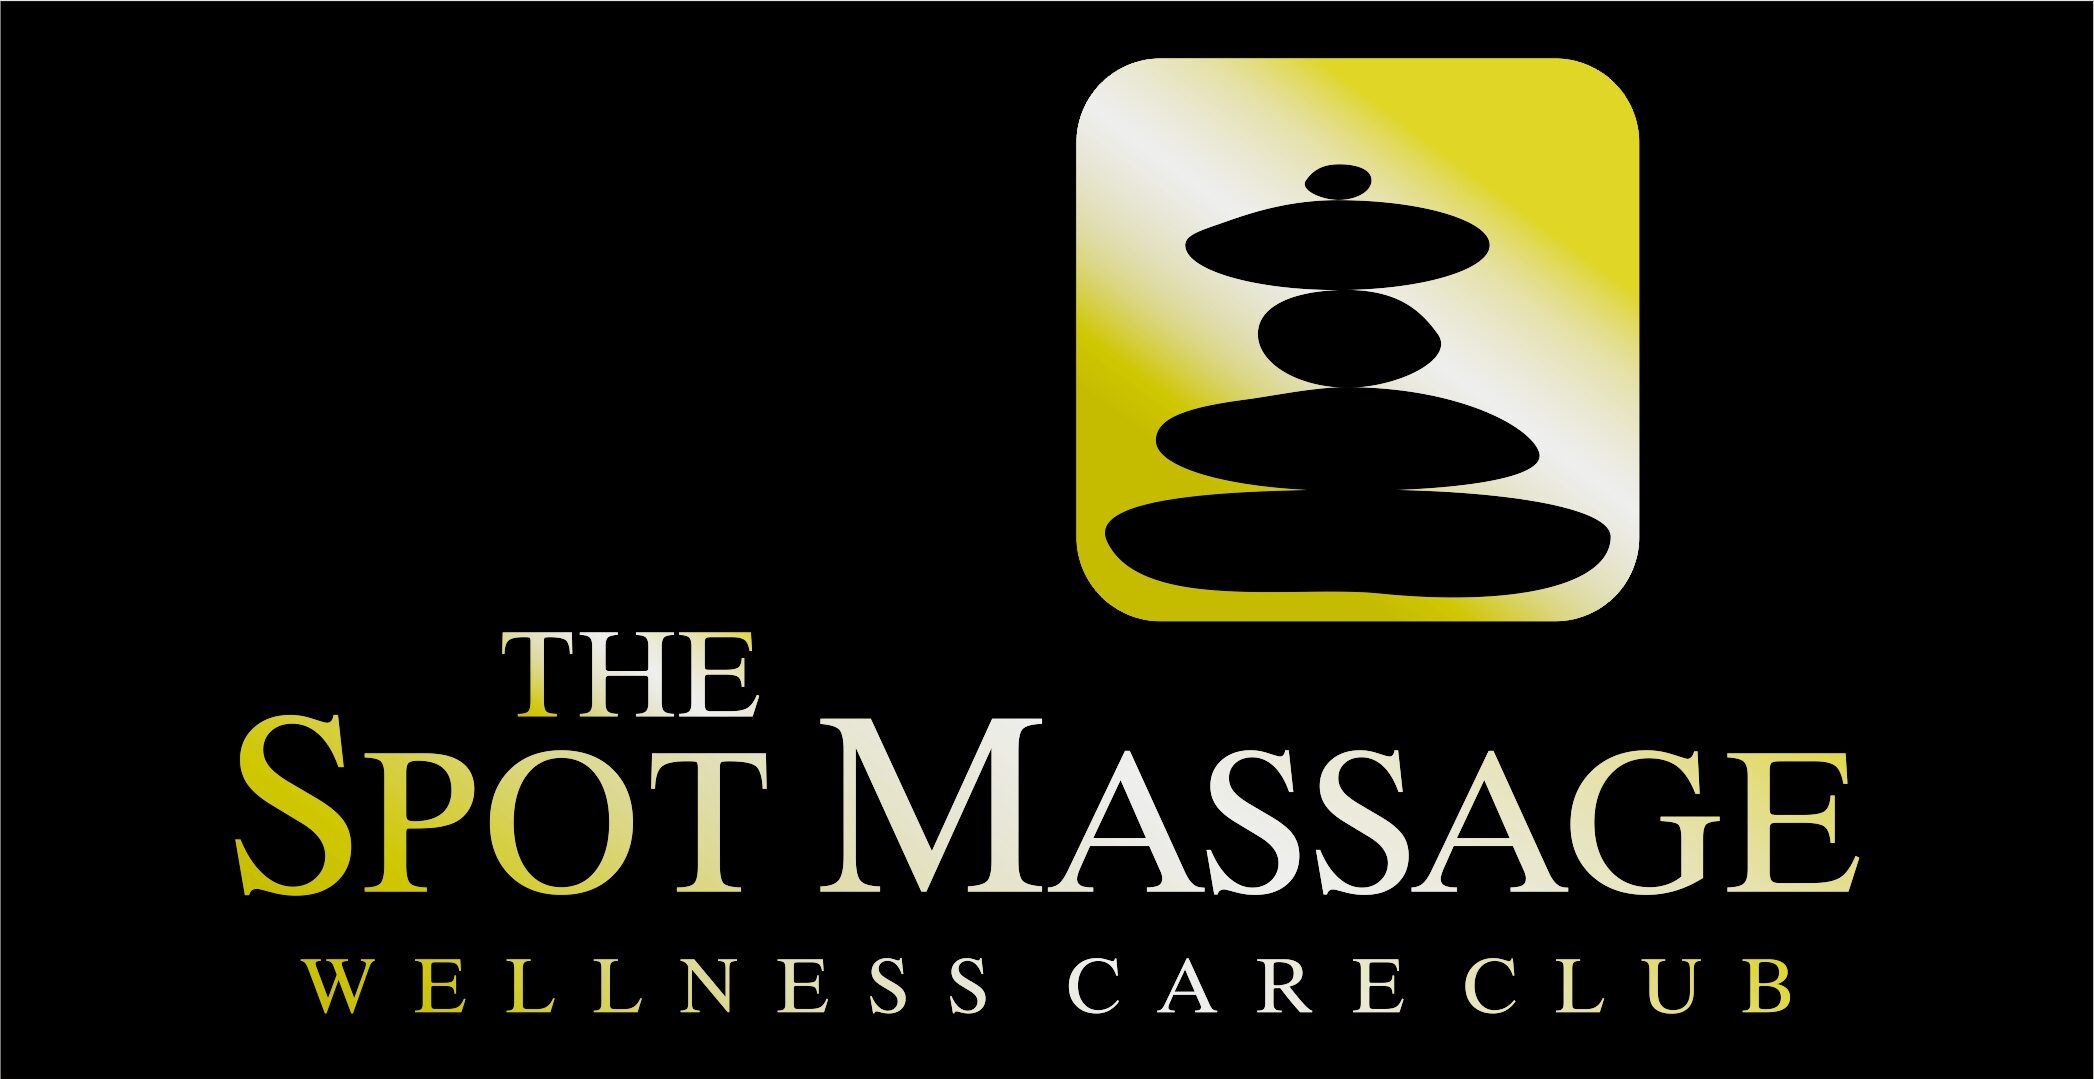 The Spot Massage